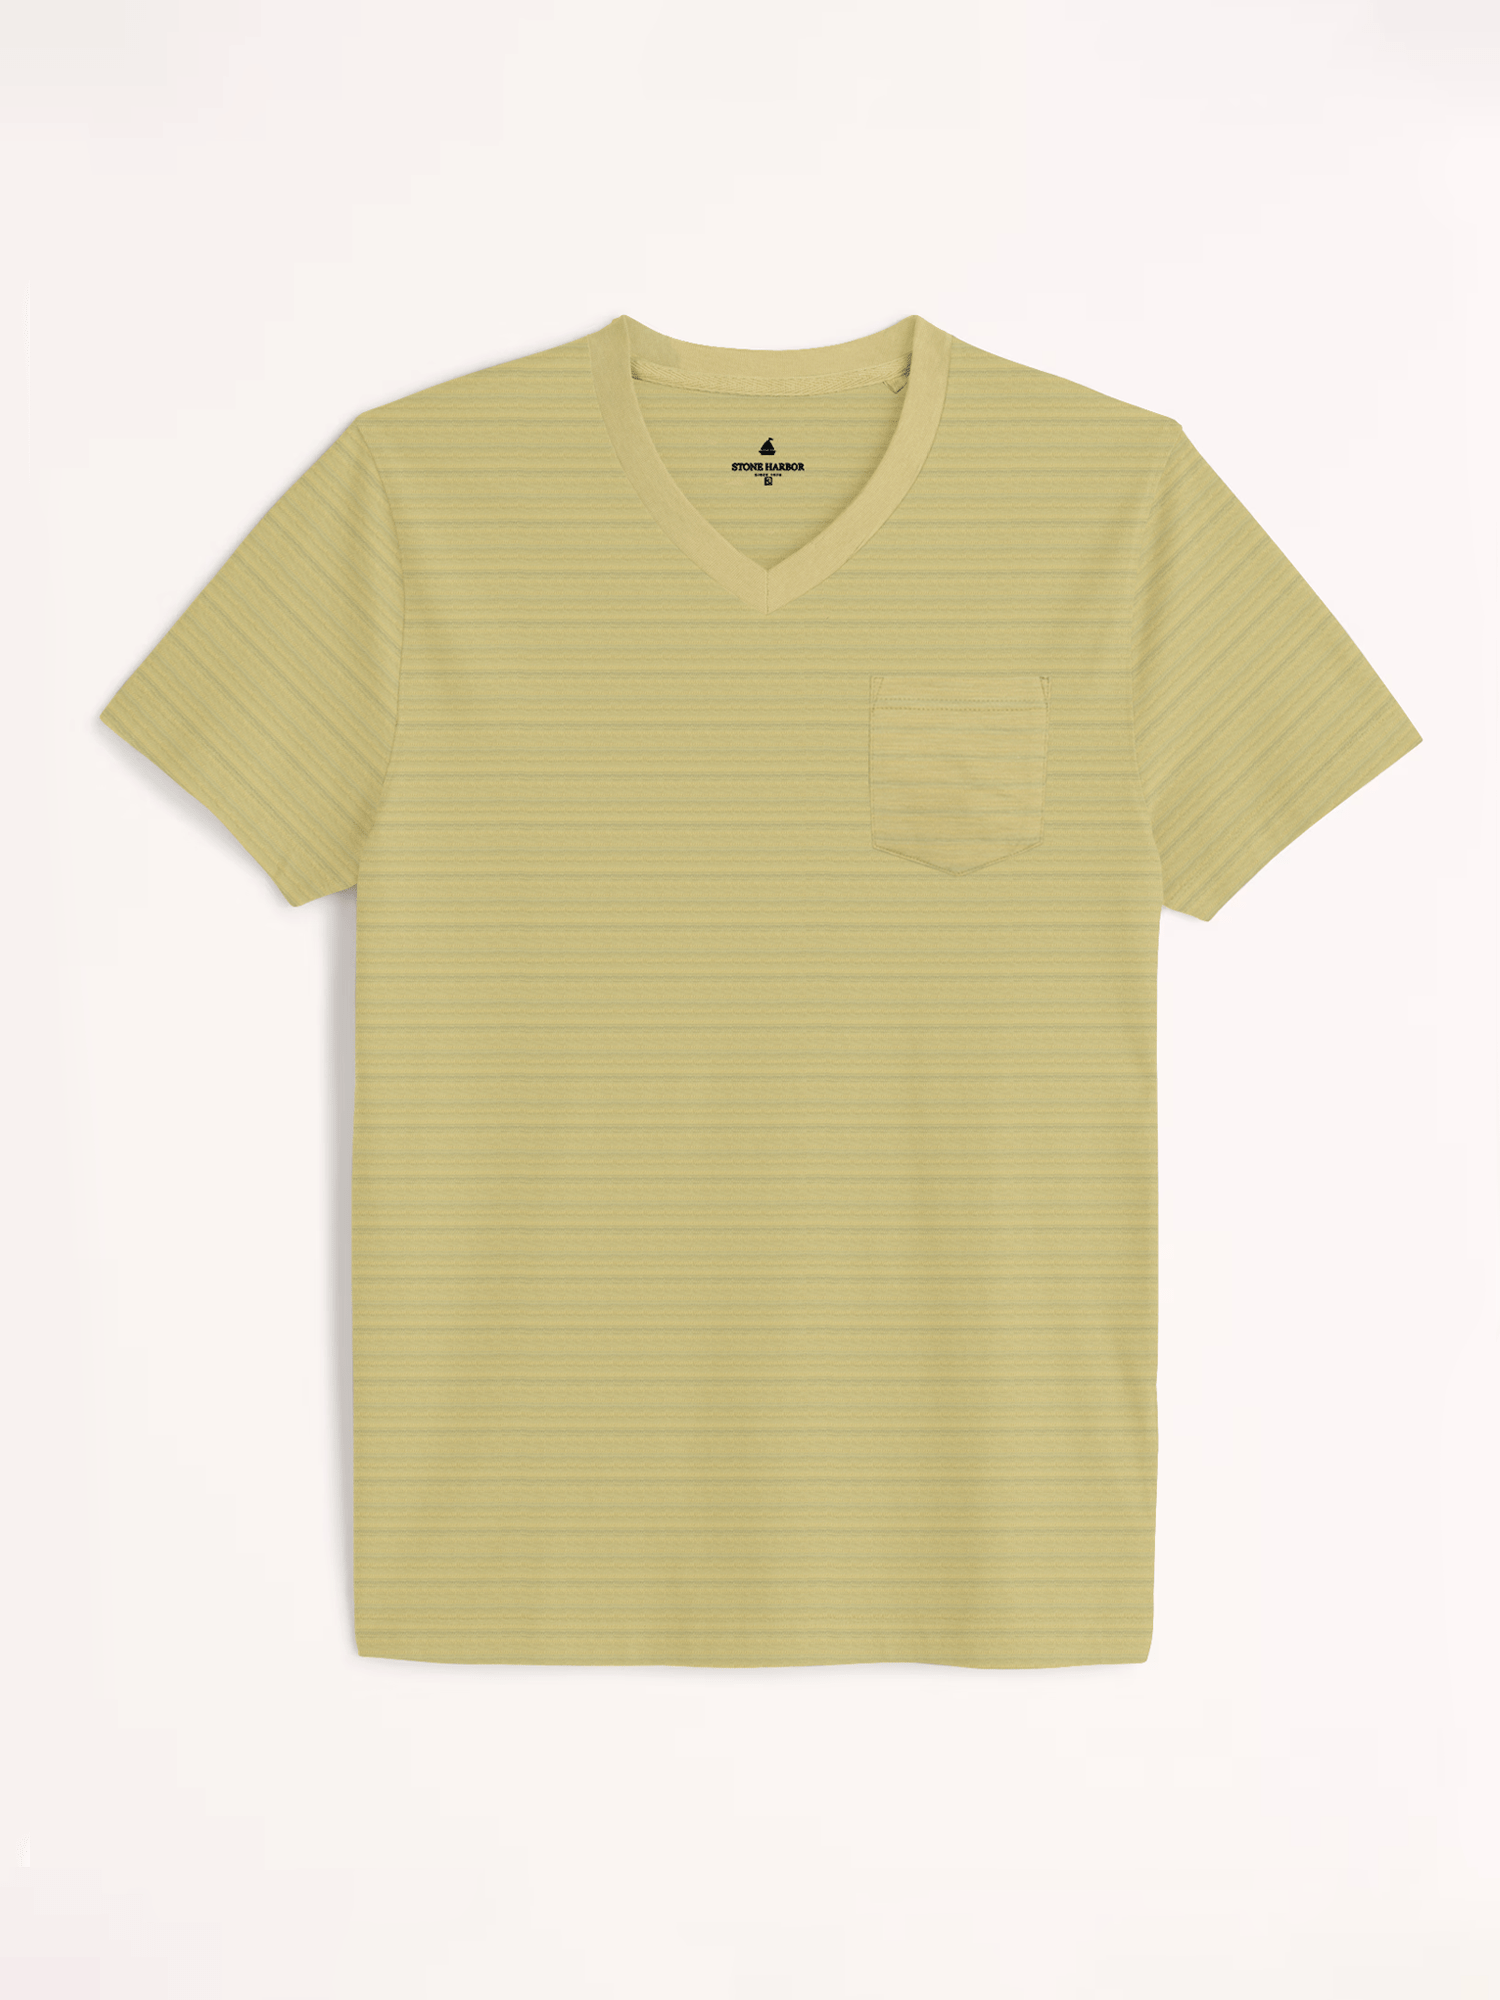 Stone Harbor T-shirts MEN'S MUSTARD V-NECK T-SHIRT